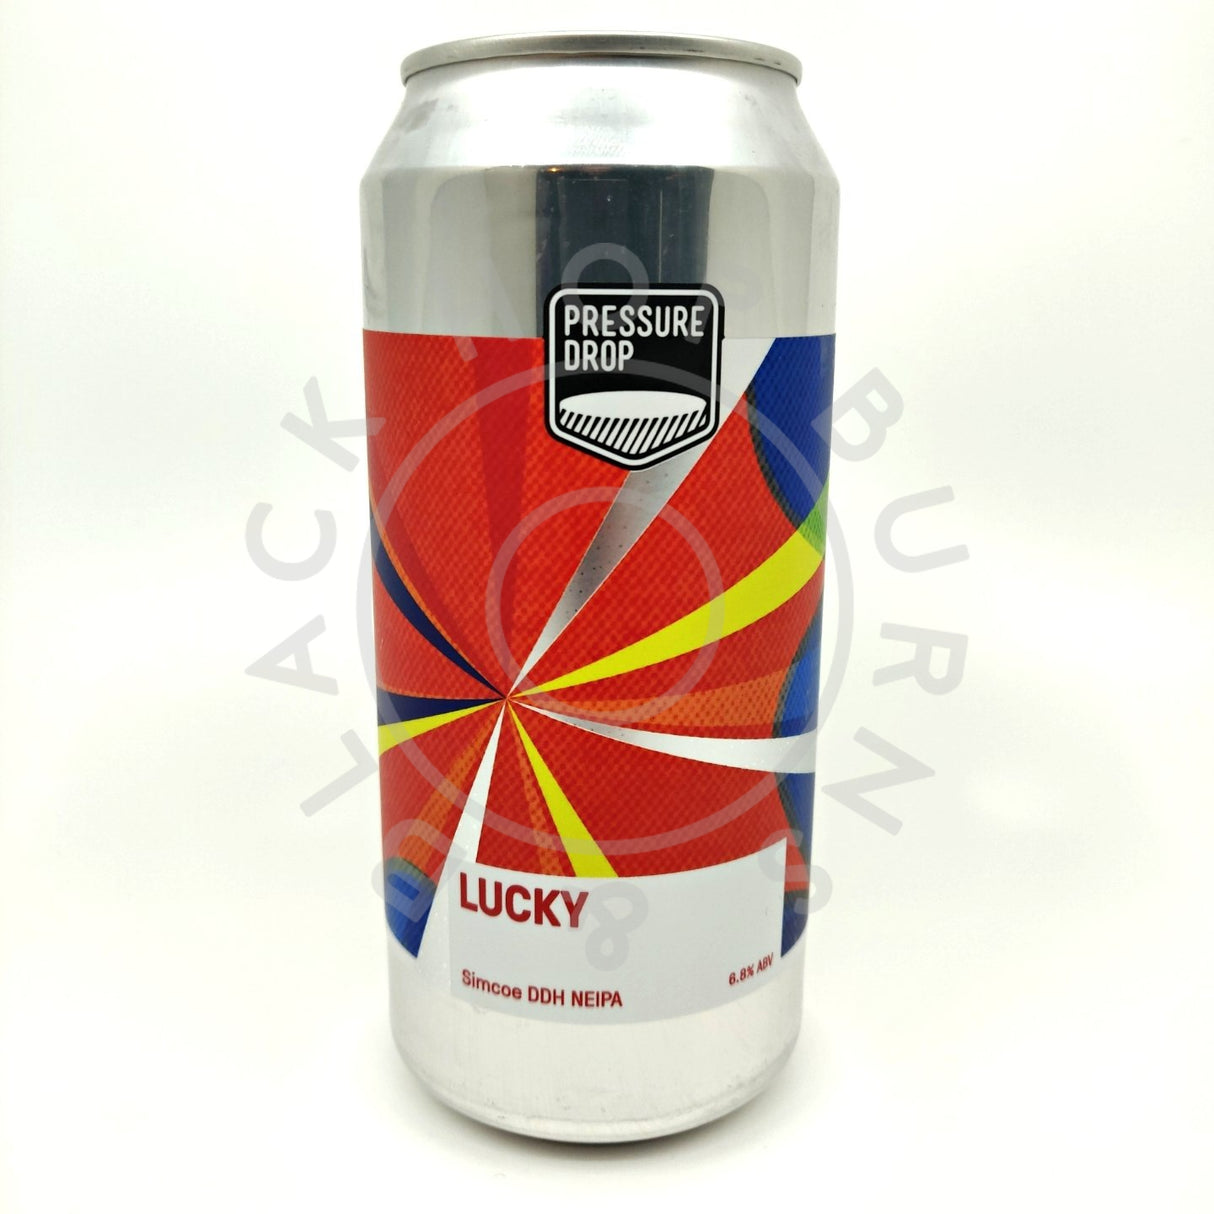 Pressure Drop Lucky Simcoe DDH New England IPA 6.8% (440ml can)-Hop Burns & Black